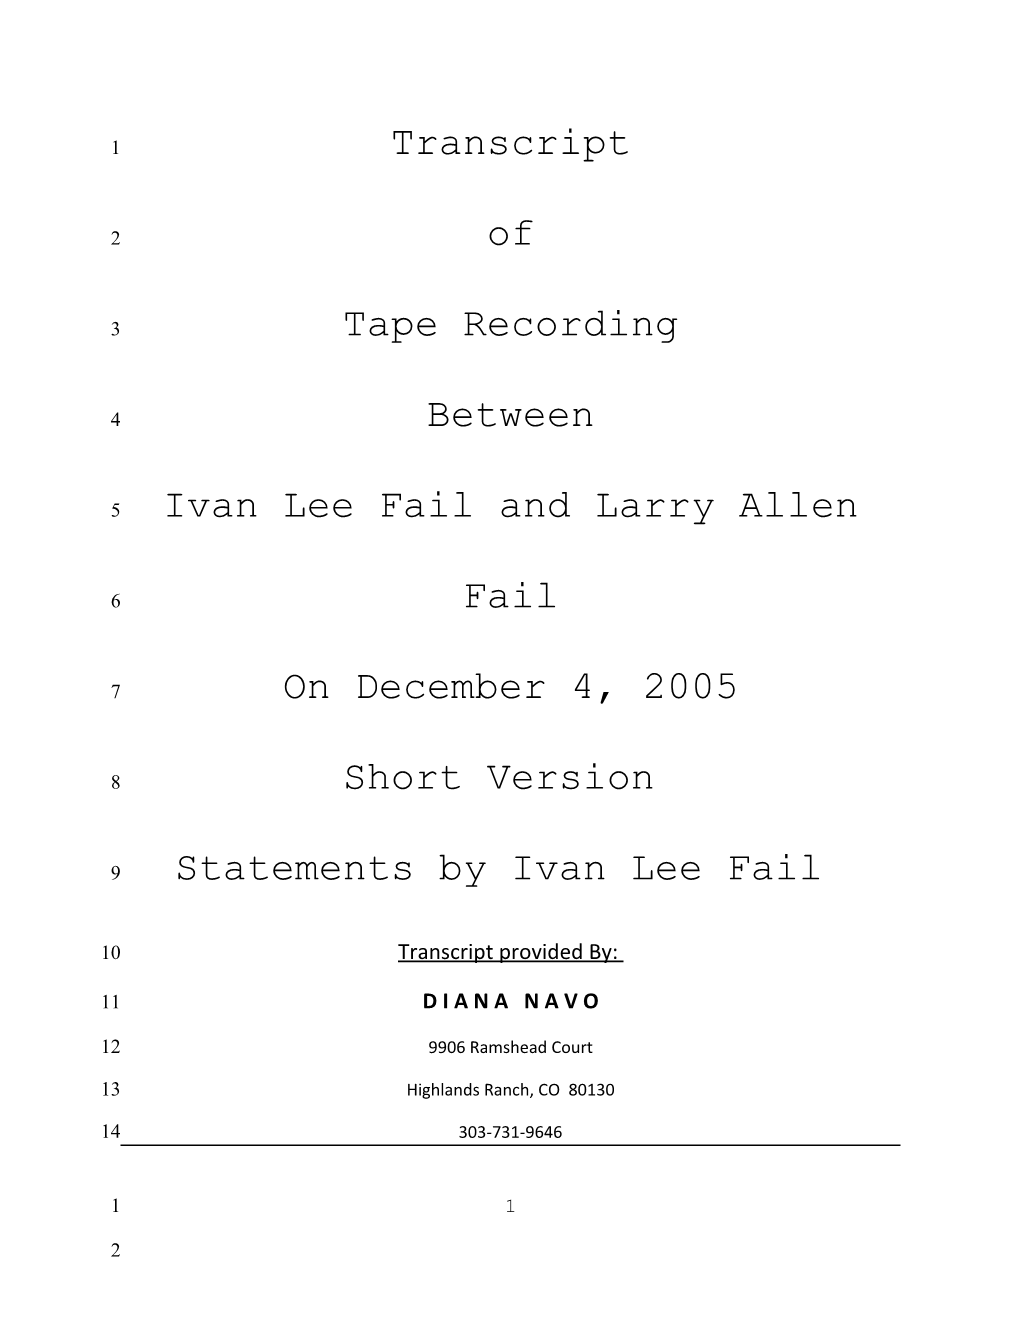 Ivan Lee Fail and Larry Allen Fail